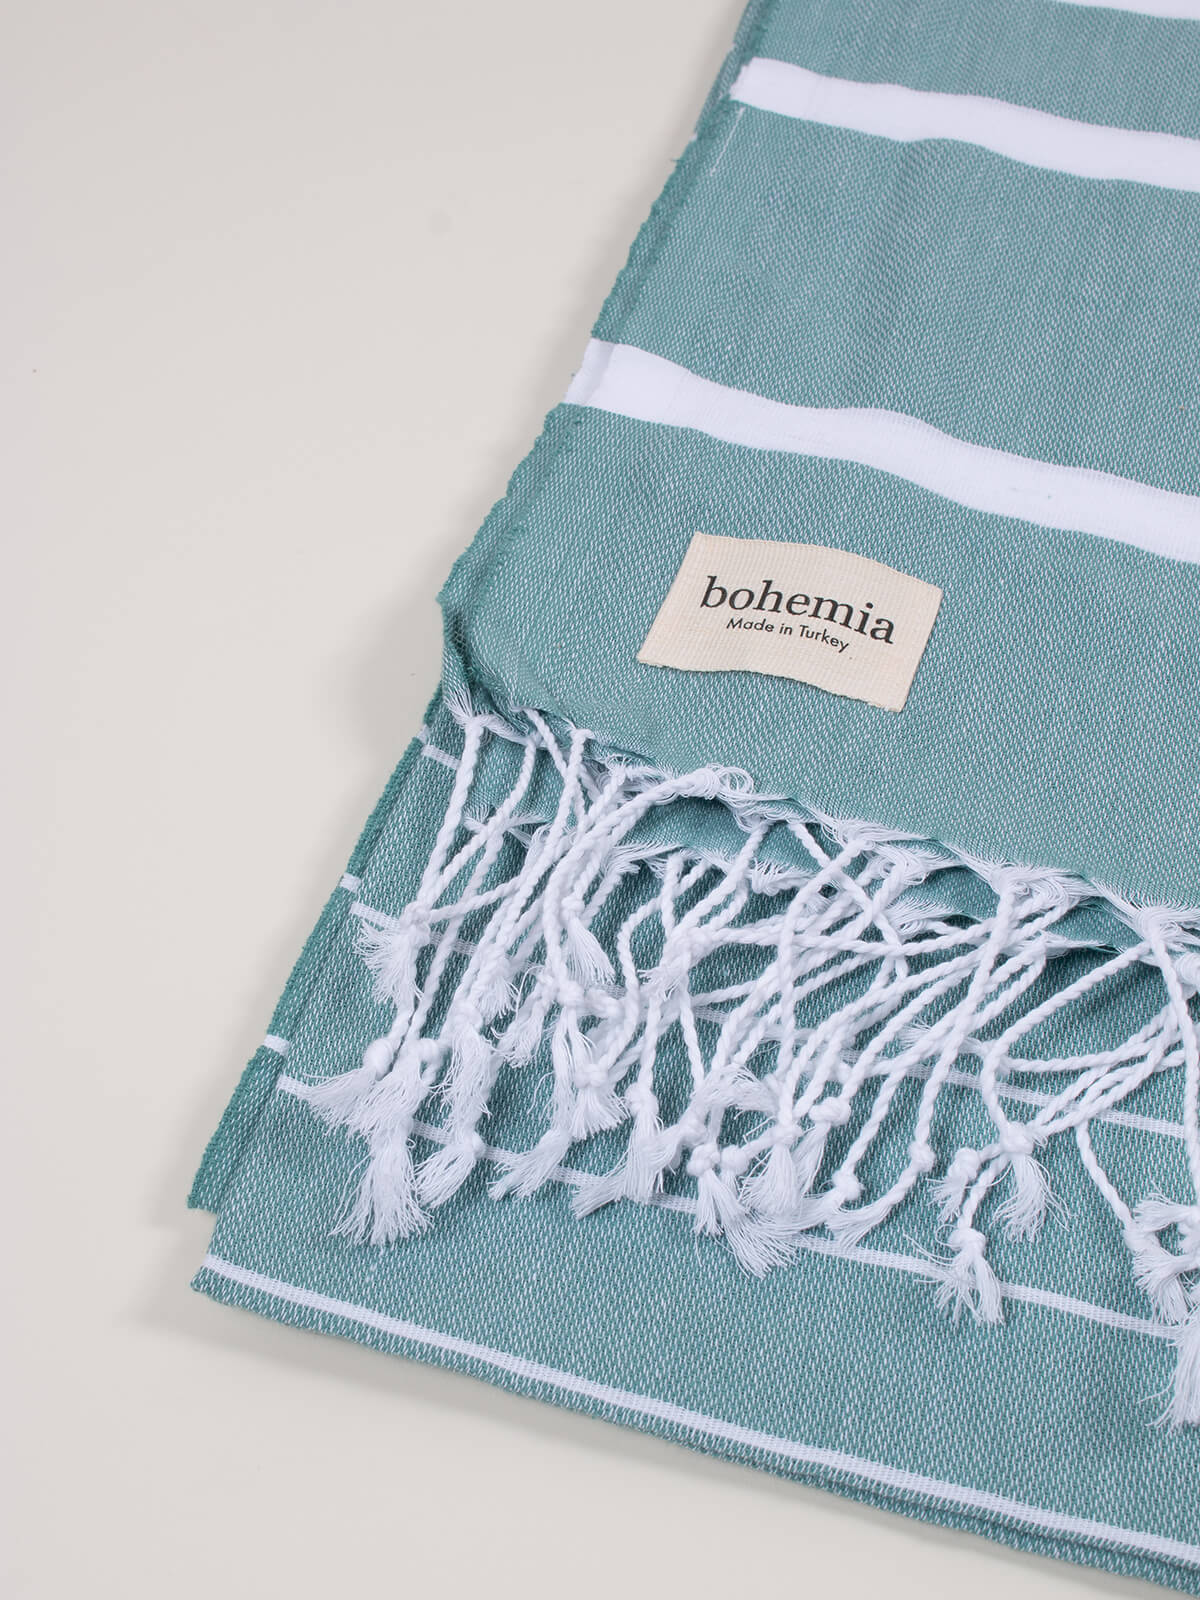 bohemia-design-ibiza-summer-hammam-towel-weave-grey-green.jpg